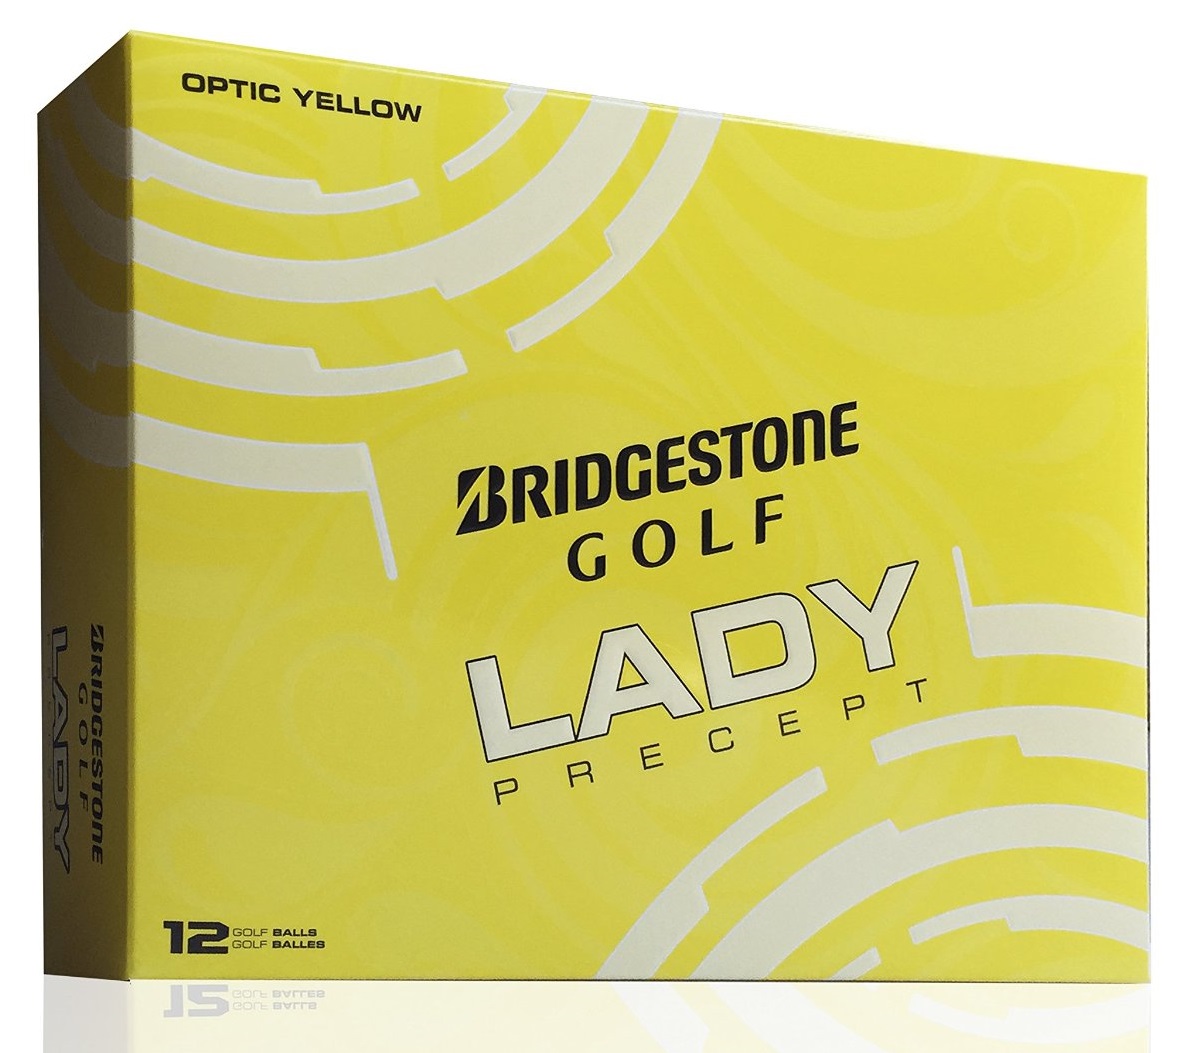 Bridgestone Lady Precept Golf Balls